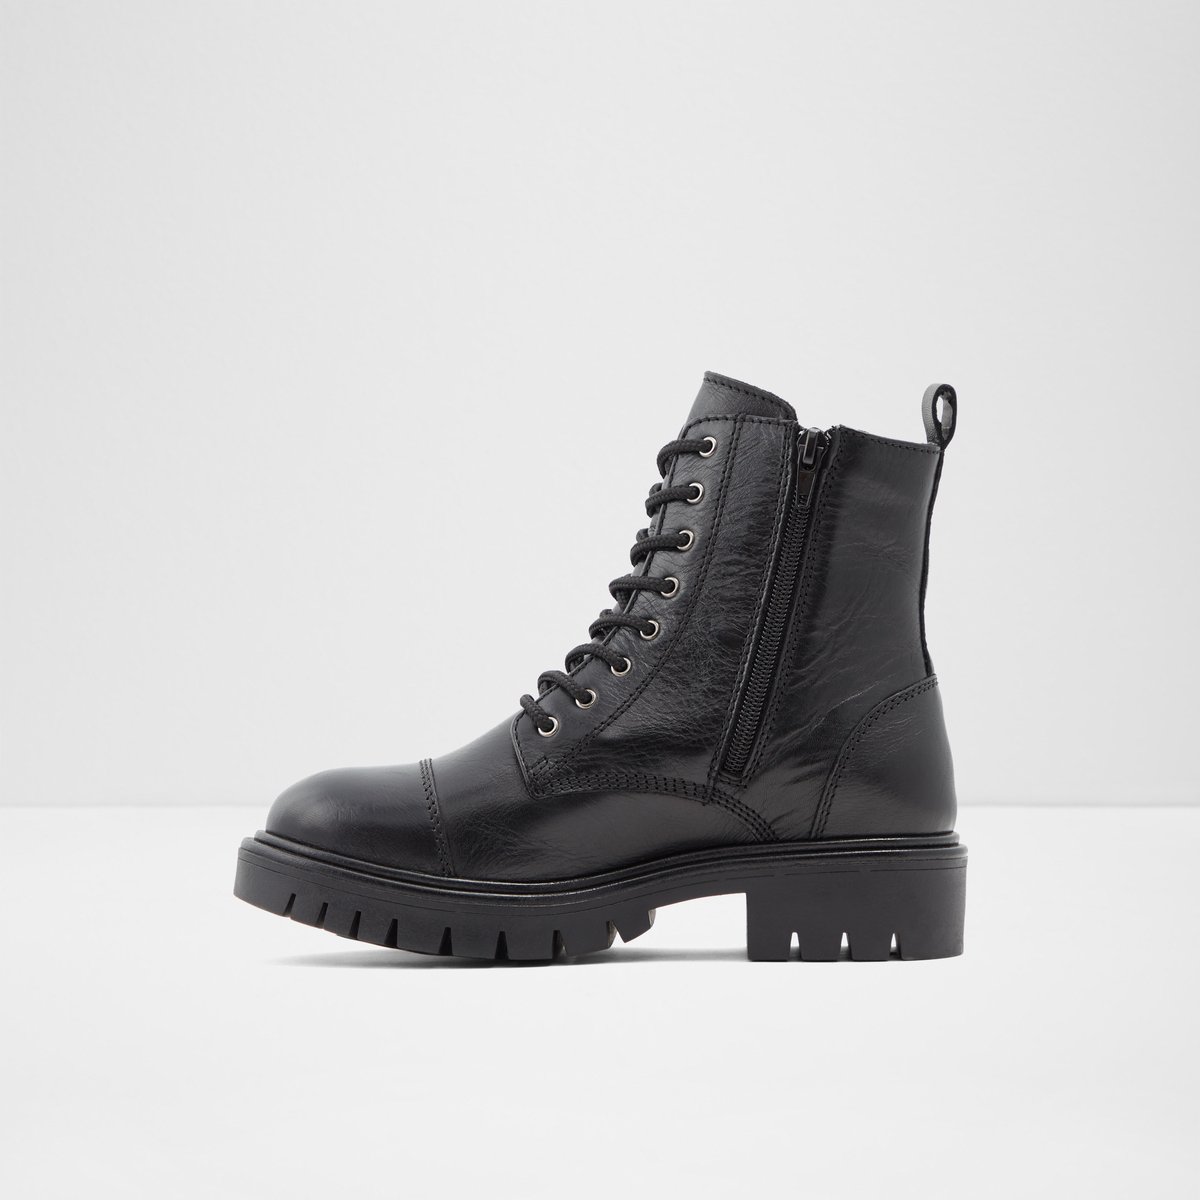 Gwemma Black Leather Smooth Women's Waterproof boots | ALDO US